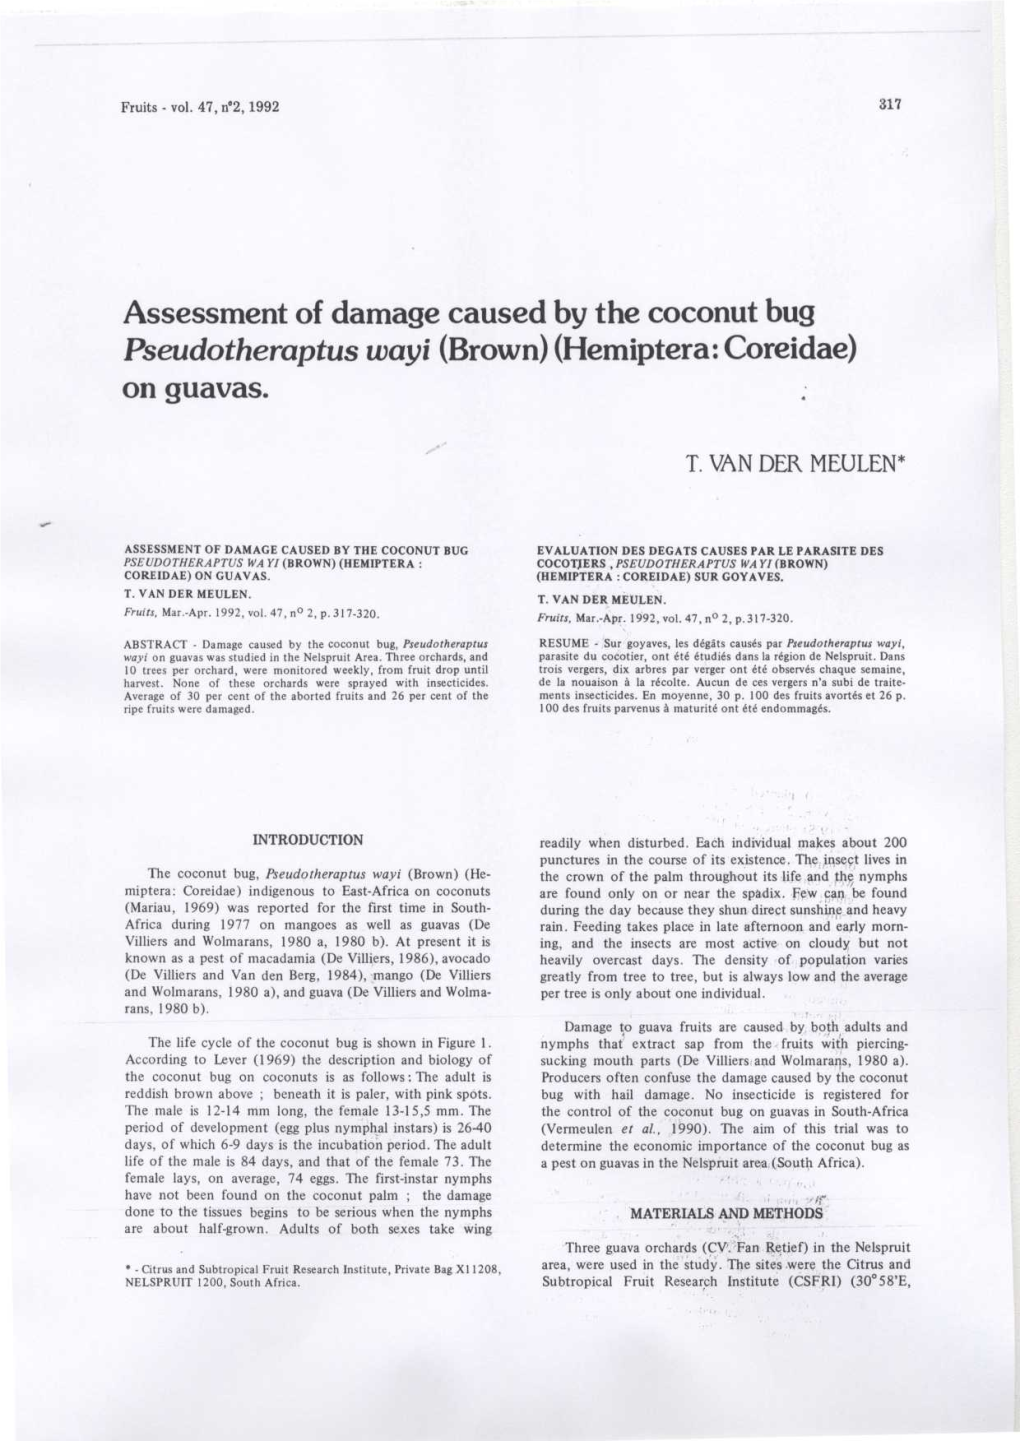 Assessment of Damage Caused by the Coconut Bug Pseudotheraptus Wayi (Brown) (Hemiptera: Coreidae) on Guavas